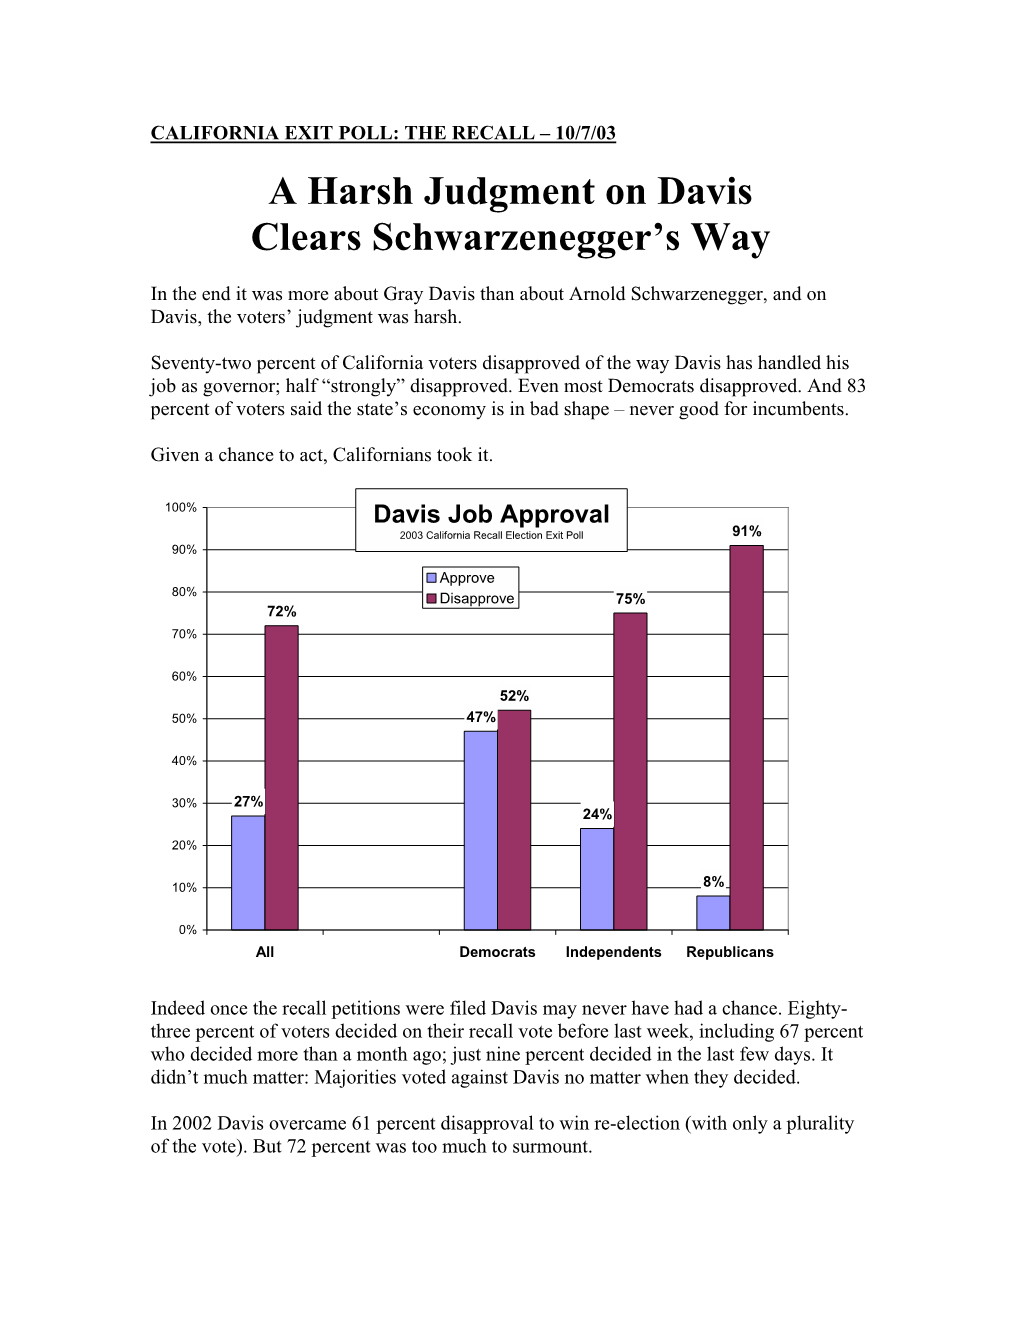 A Harsh Judgment on Davis Clears Schwarzenegger's